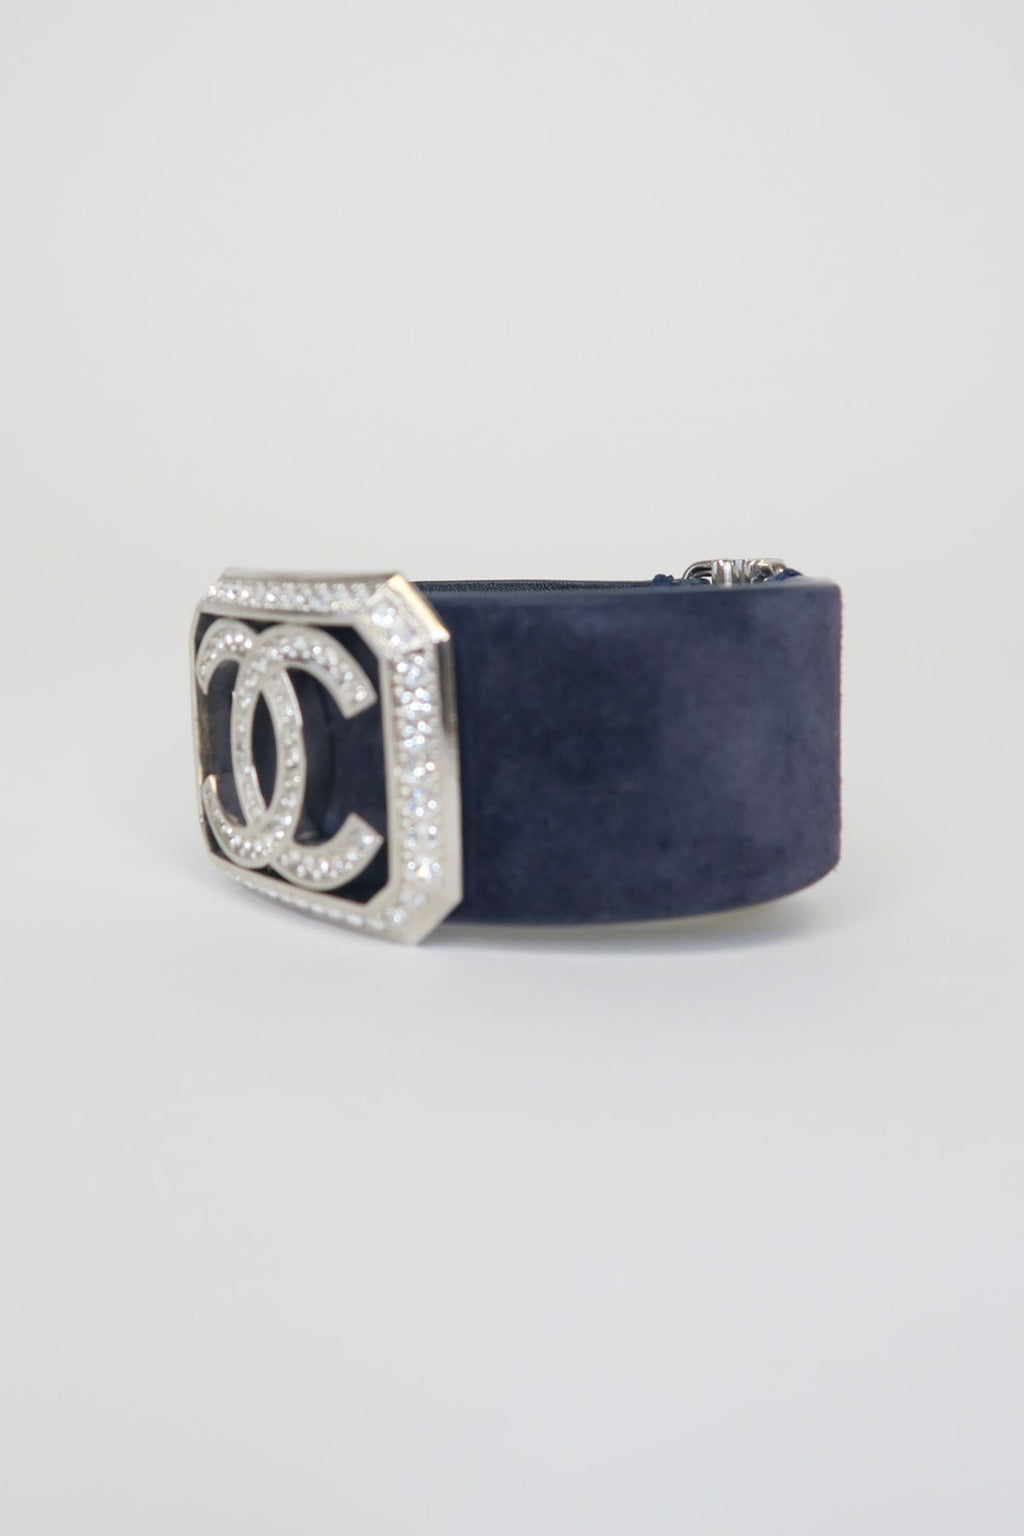 Chanel Strass CC Blue Suede Wrap Bracelet